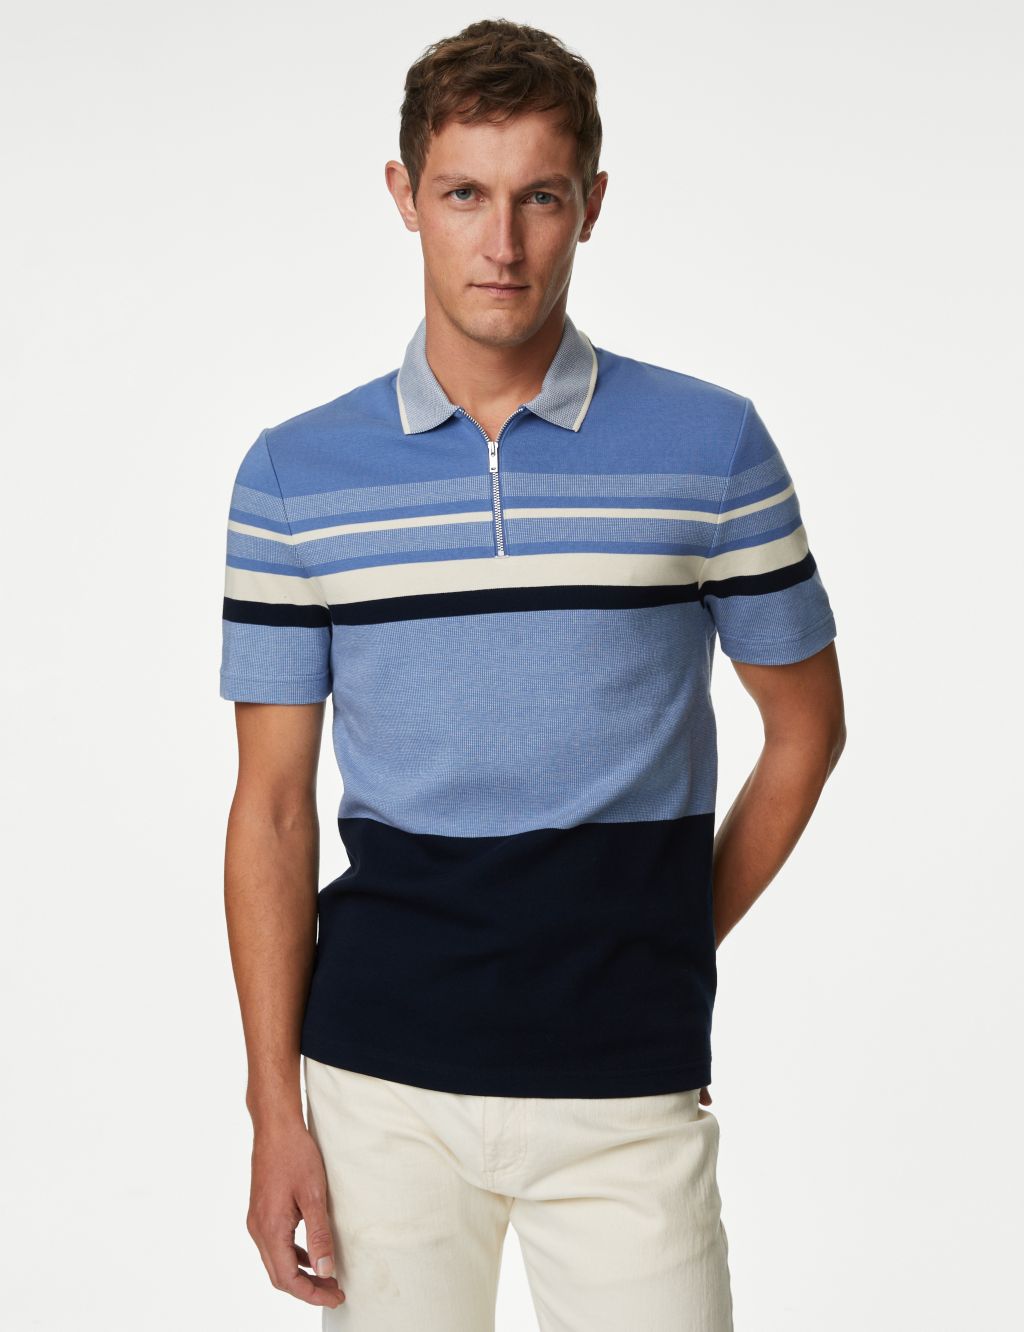 Pure Cotton Double Knit Striped Polo Shirt image 4